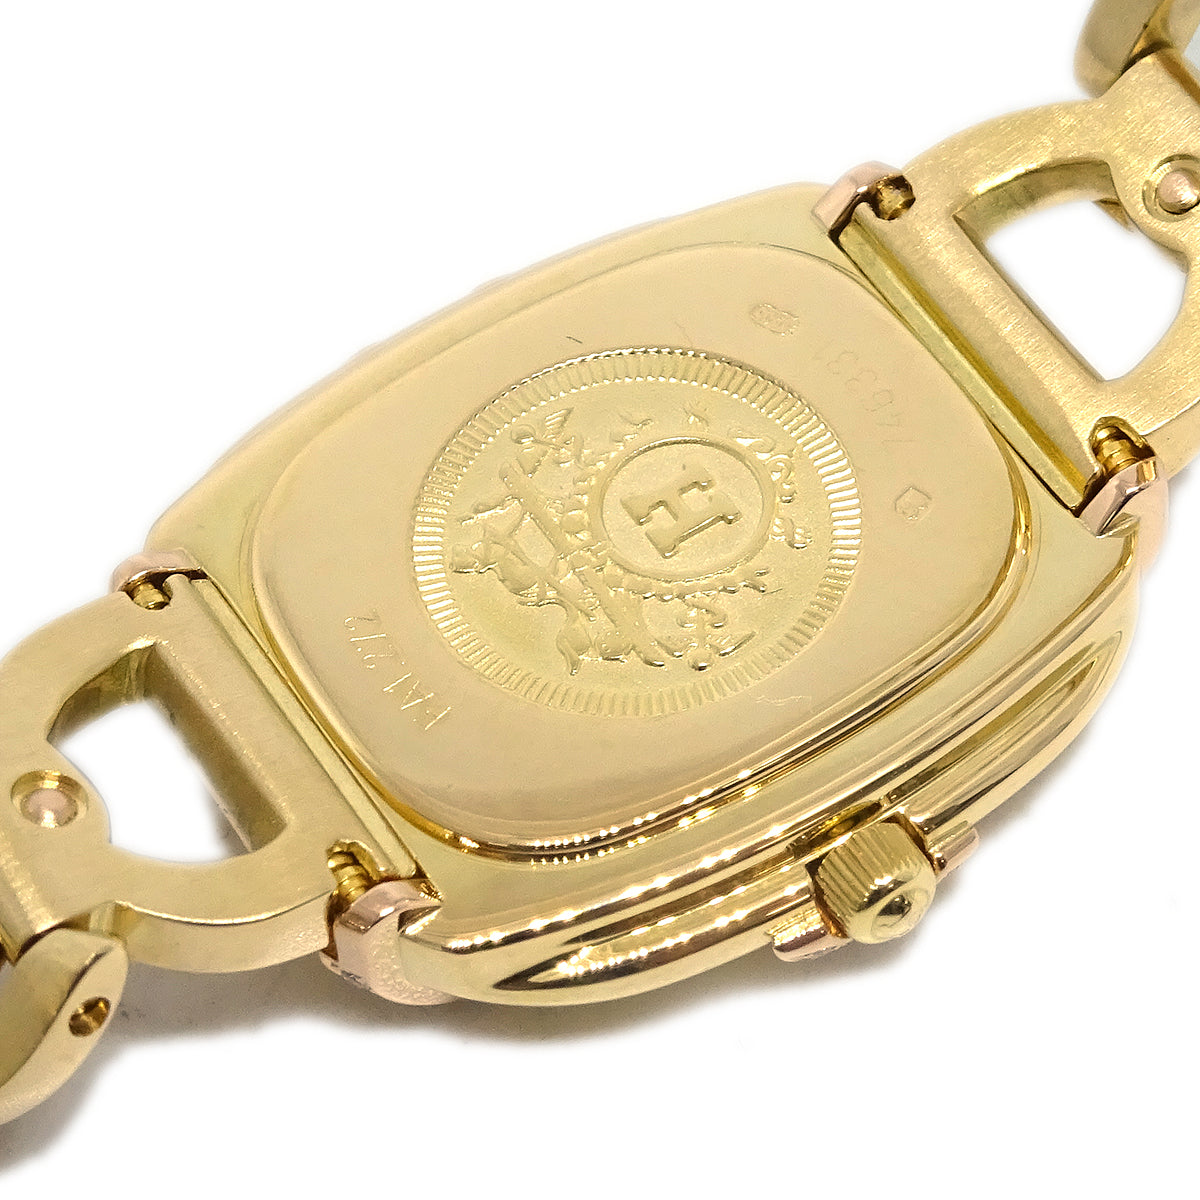 Hermes Ruban Watch 18KYG Diamond Ref.FA1.272